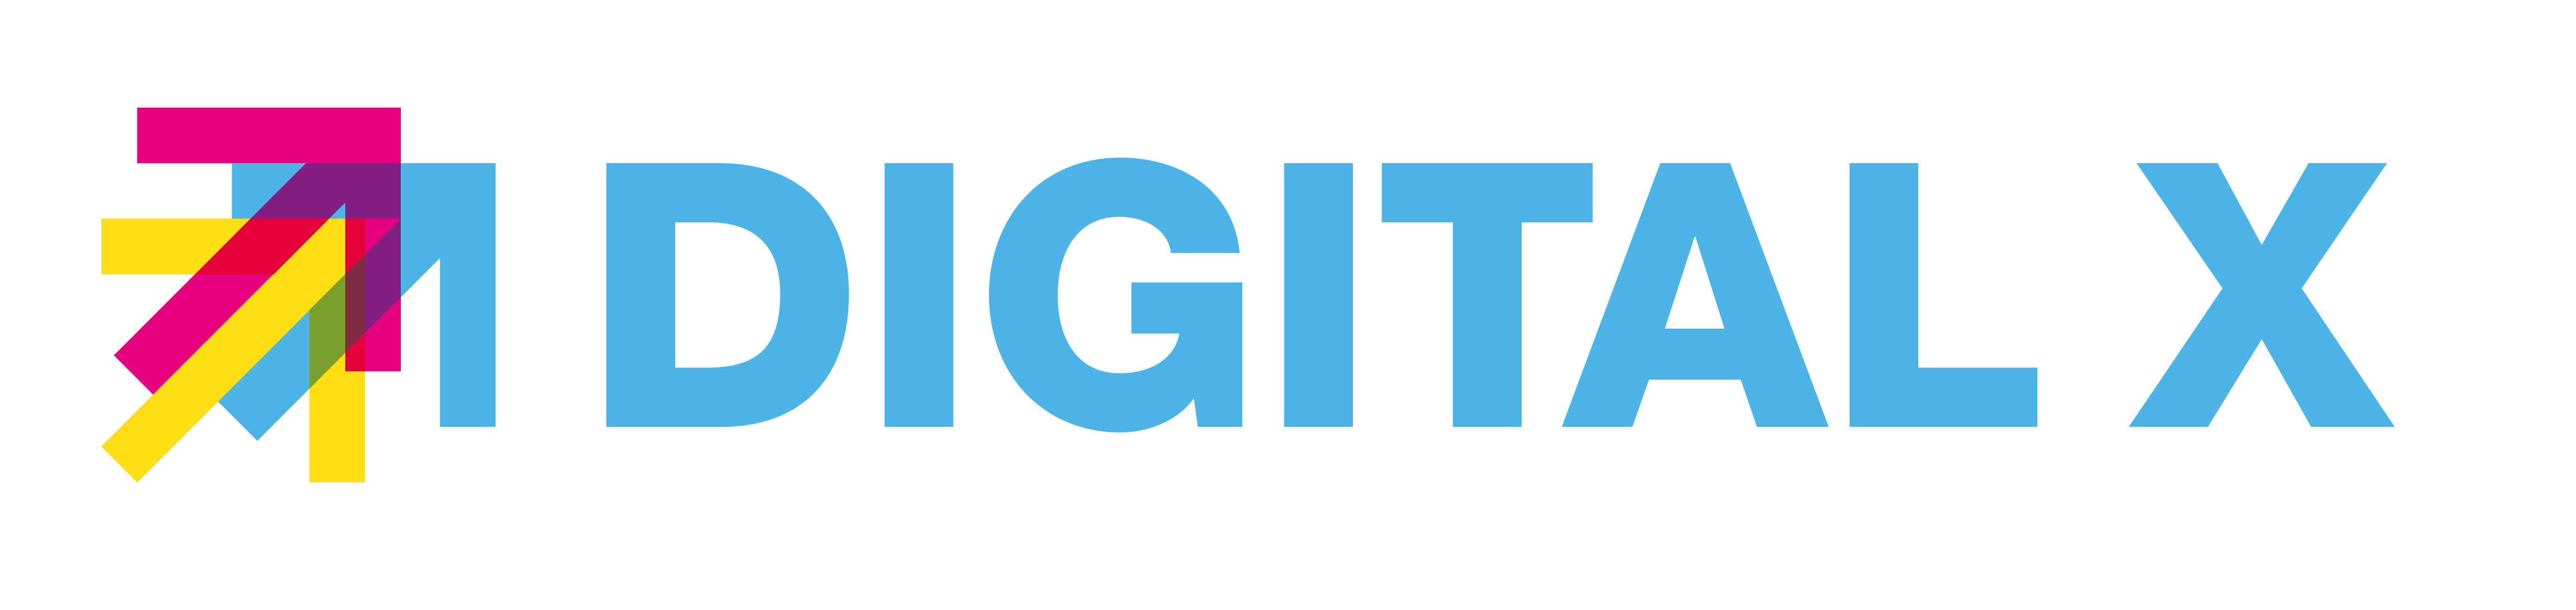 DigitalX_Logo_1